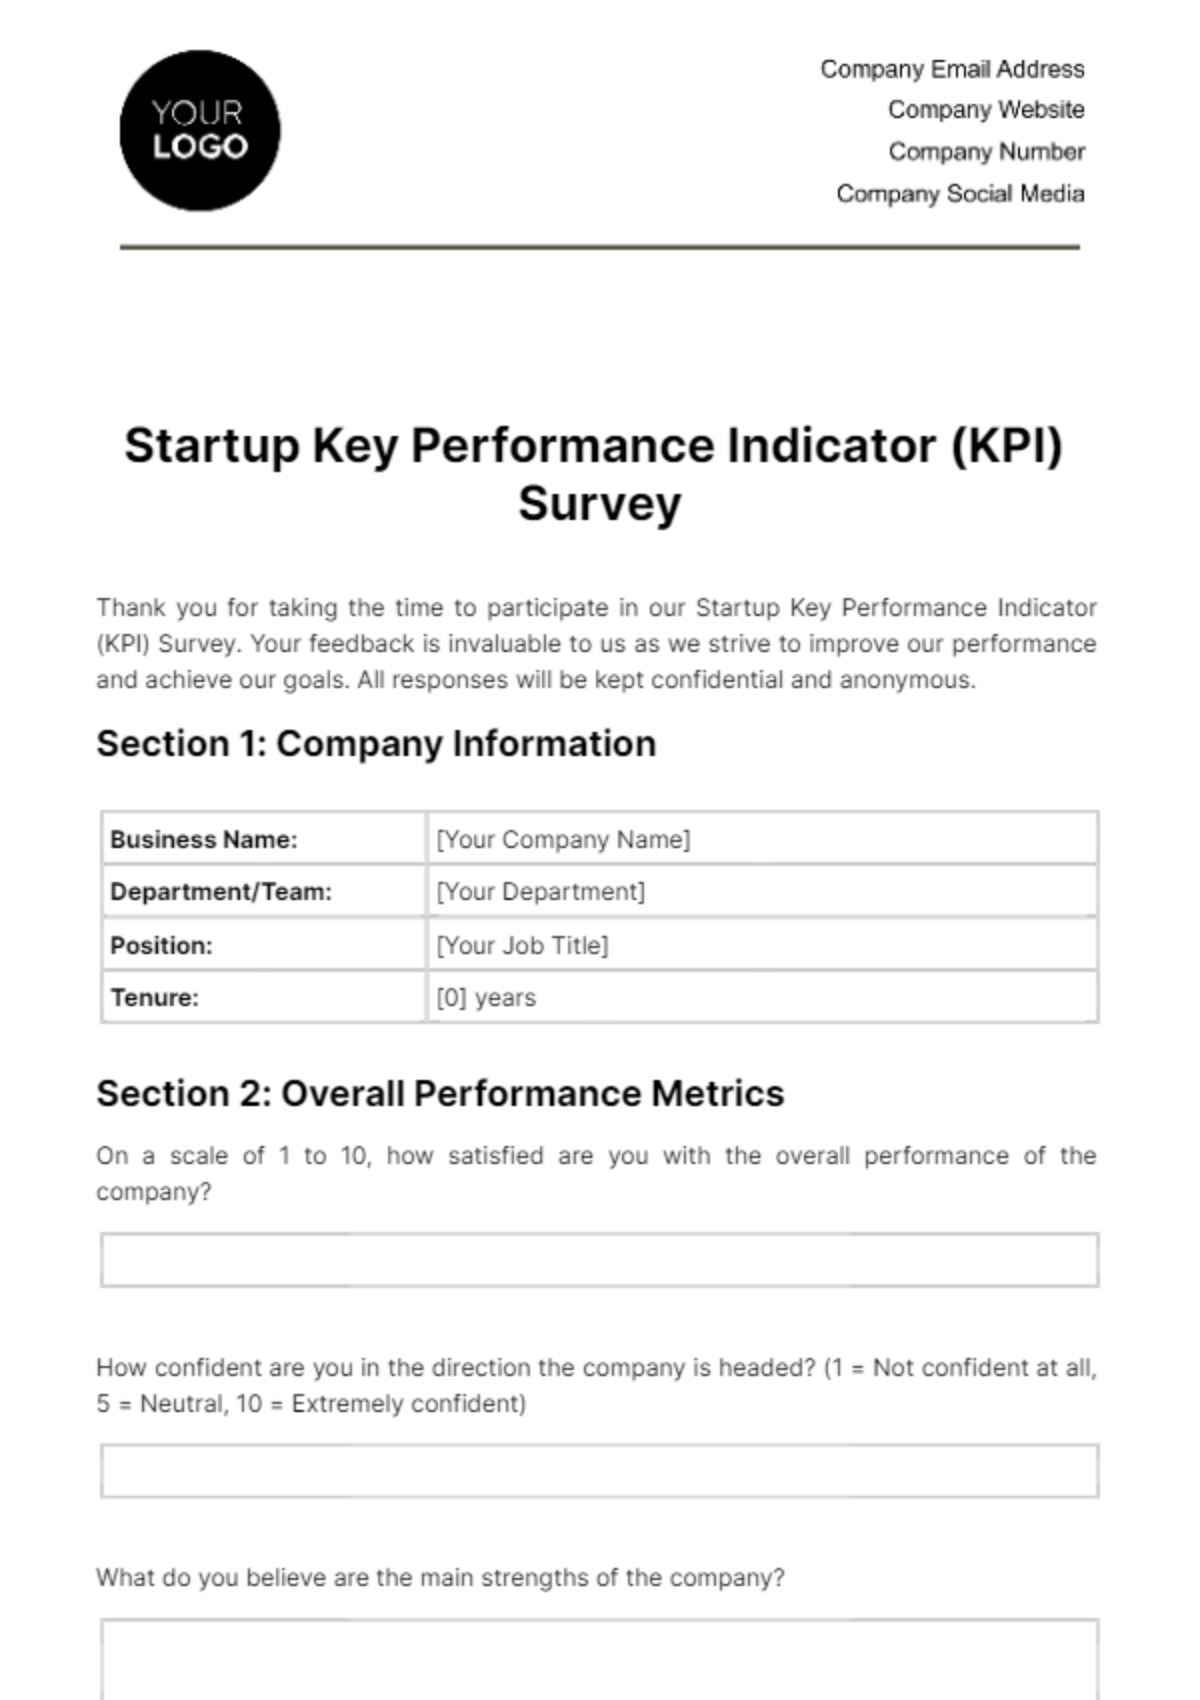 Startup Key Performance Indicator (KPI) Survey Template